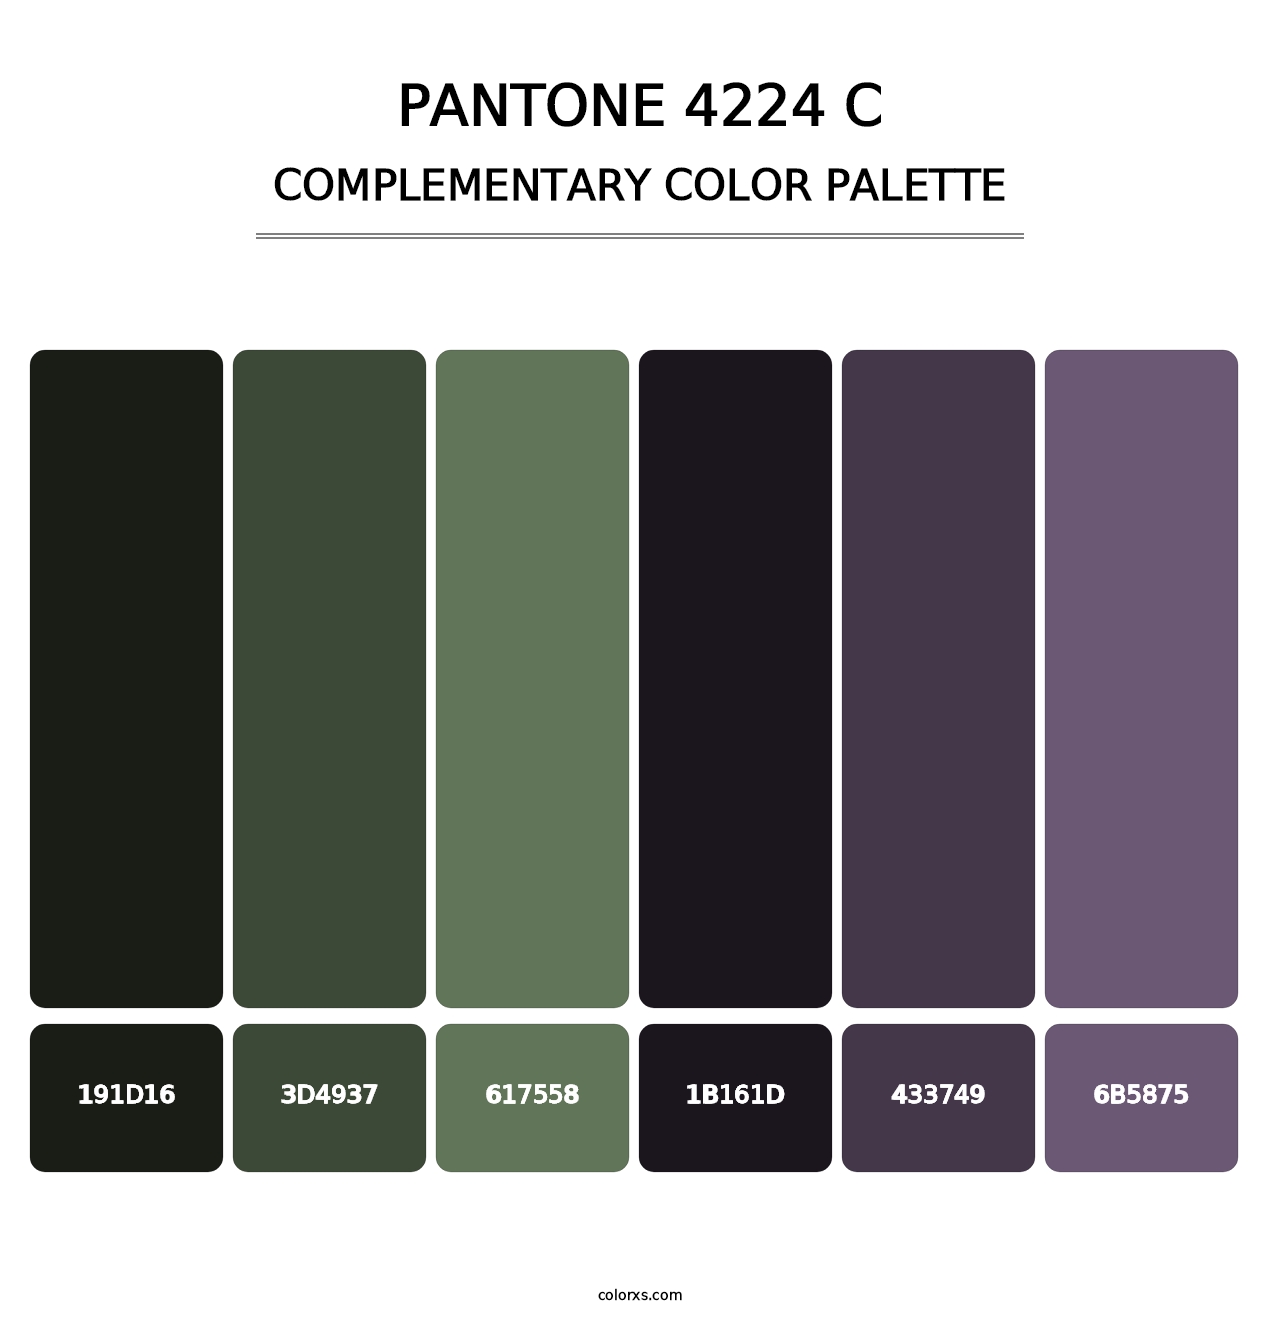 PANTONE 4224 C - Complementary Color Palette